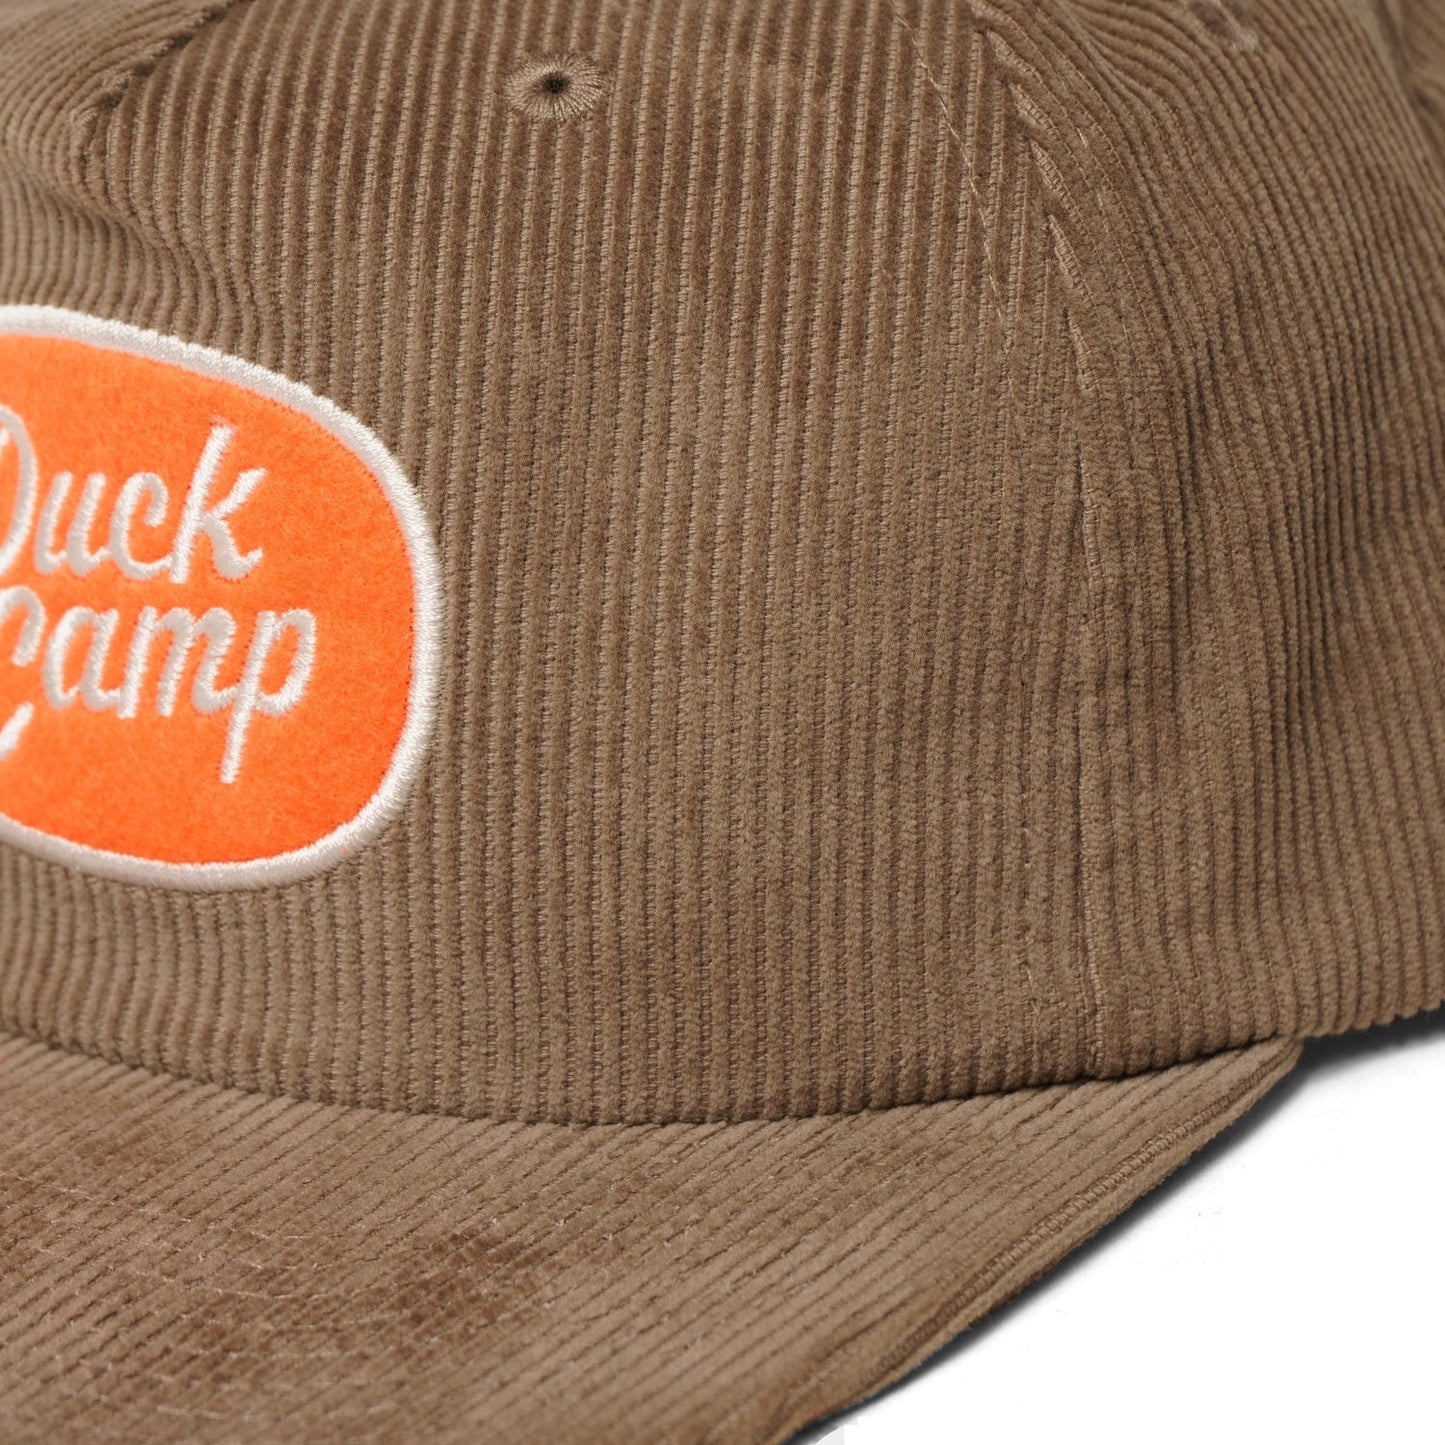 Corduroy Hat | Oval | Duck Camp - Accessories - Corduroy